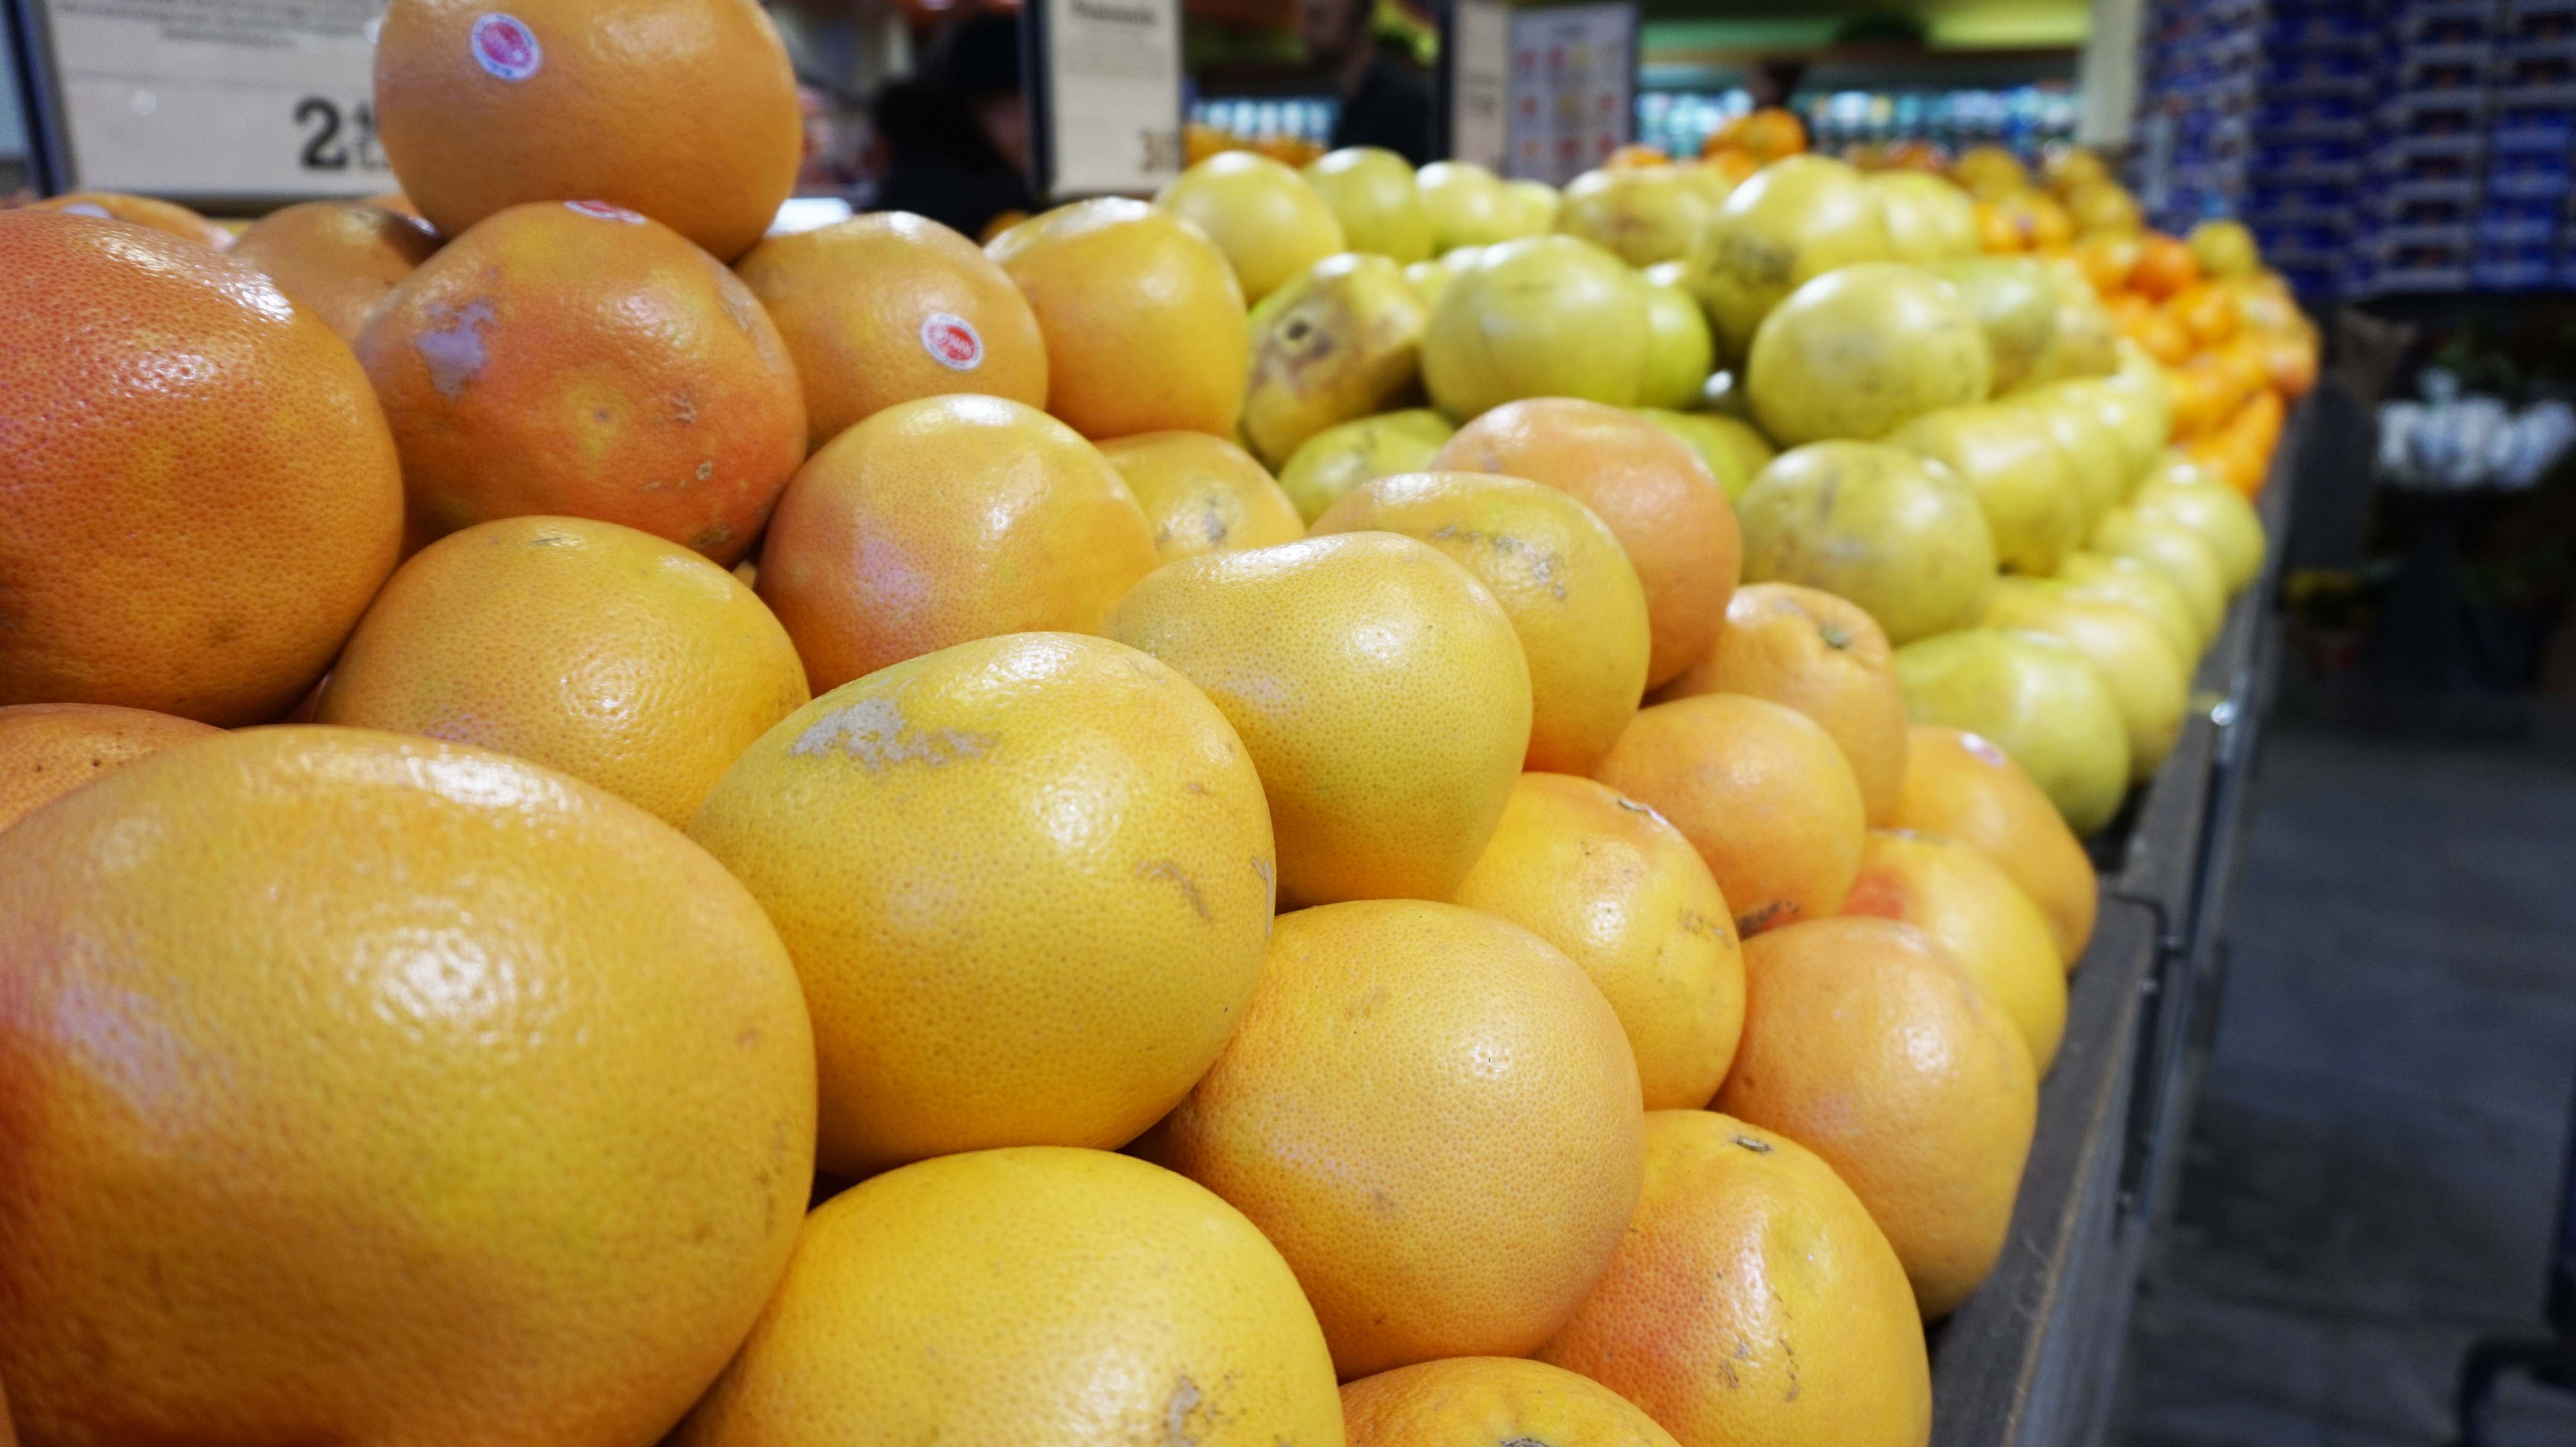 Whole Foods grapefruit